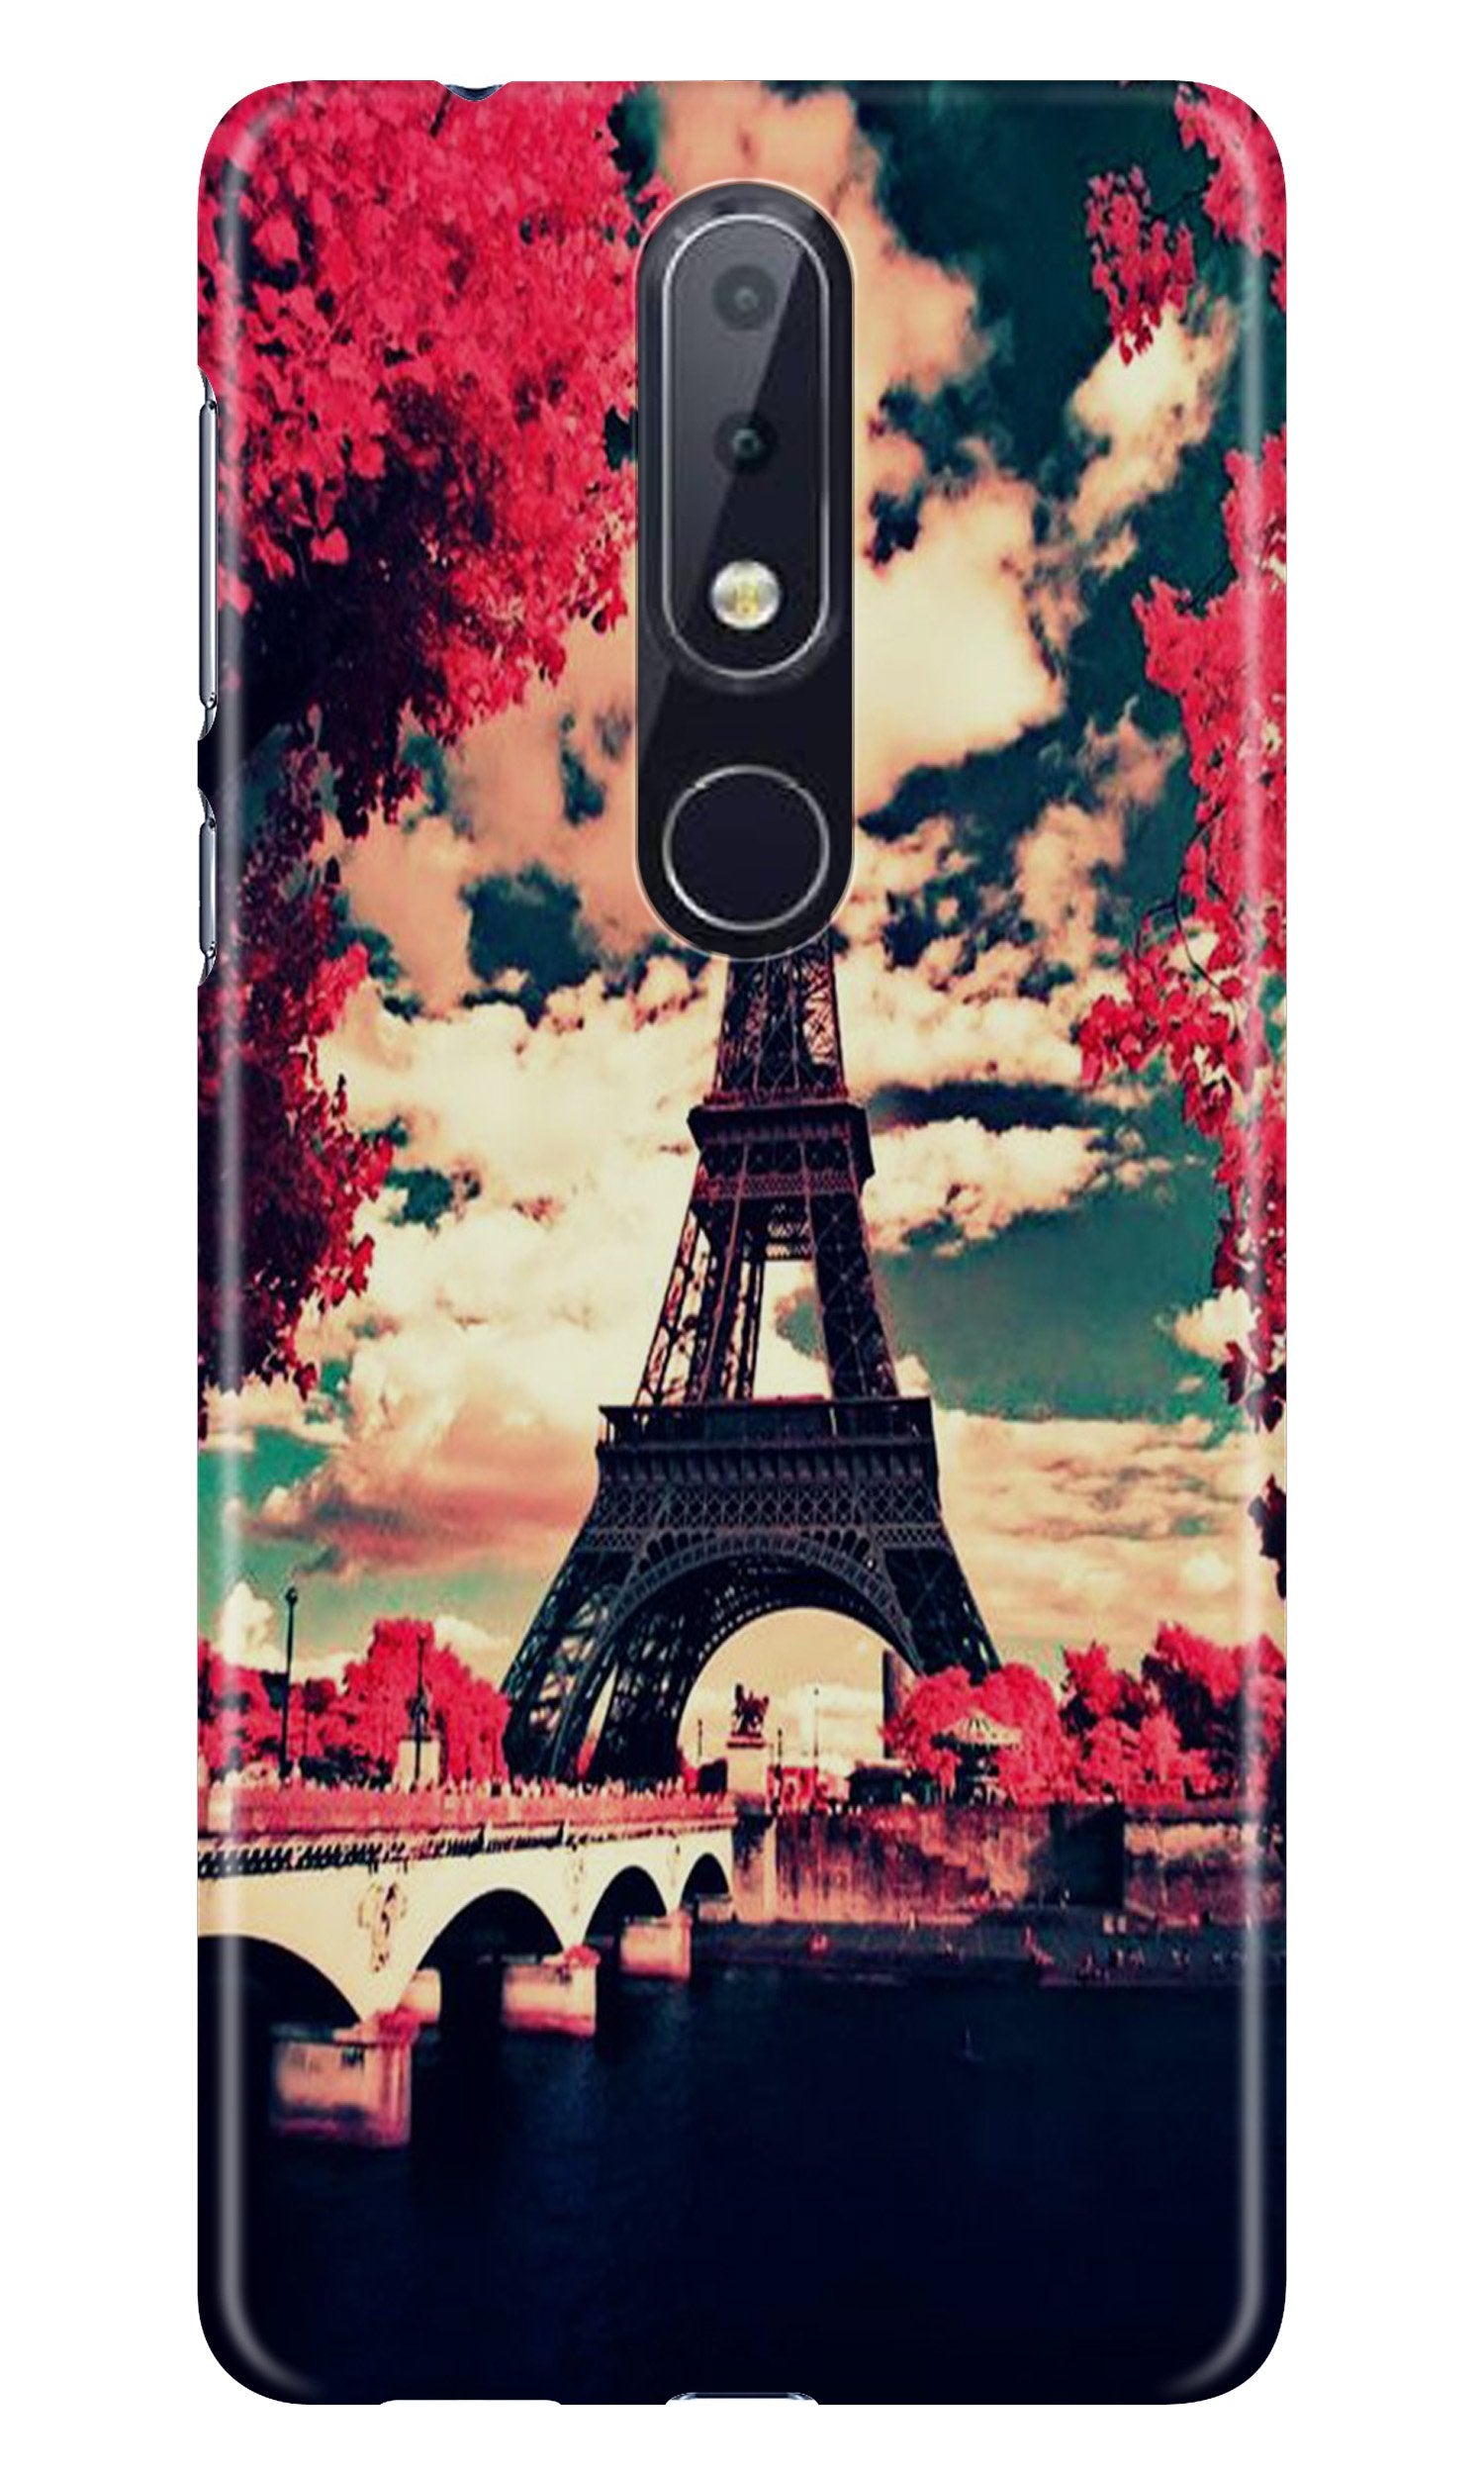 Eiffel Tower Case for Nokia 6.1 Plus (Design No. 212)